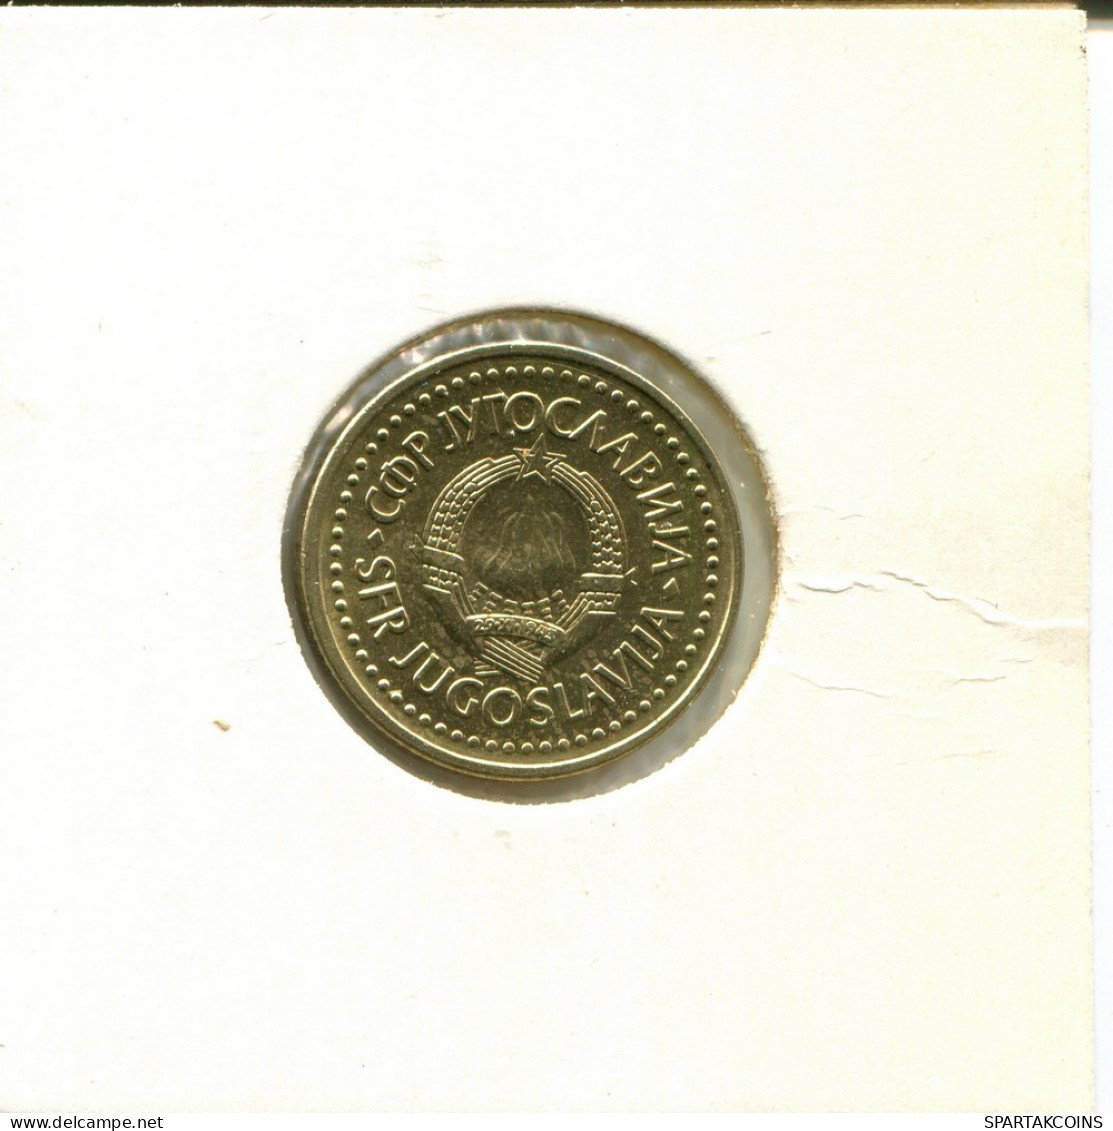 1 DINAR 1982 YUGOSLAVIA Moneda #AV139.E.A - Yougoslavie